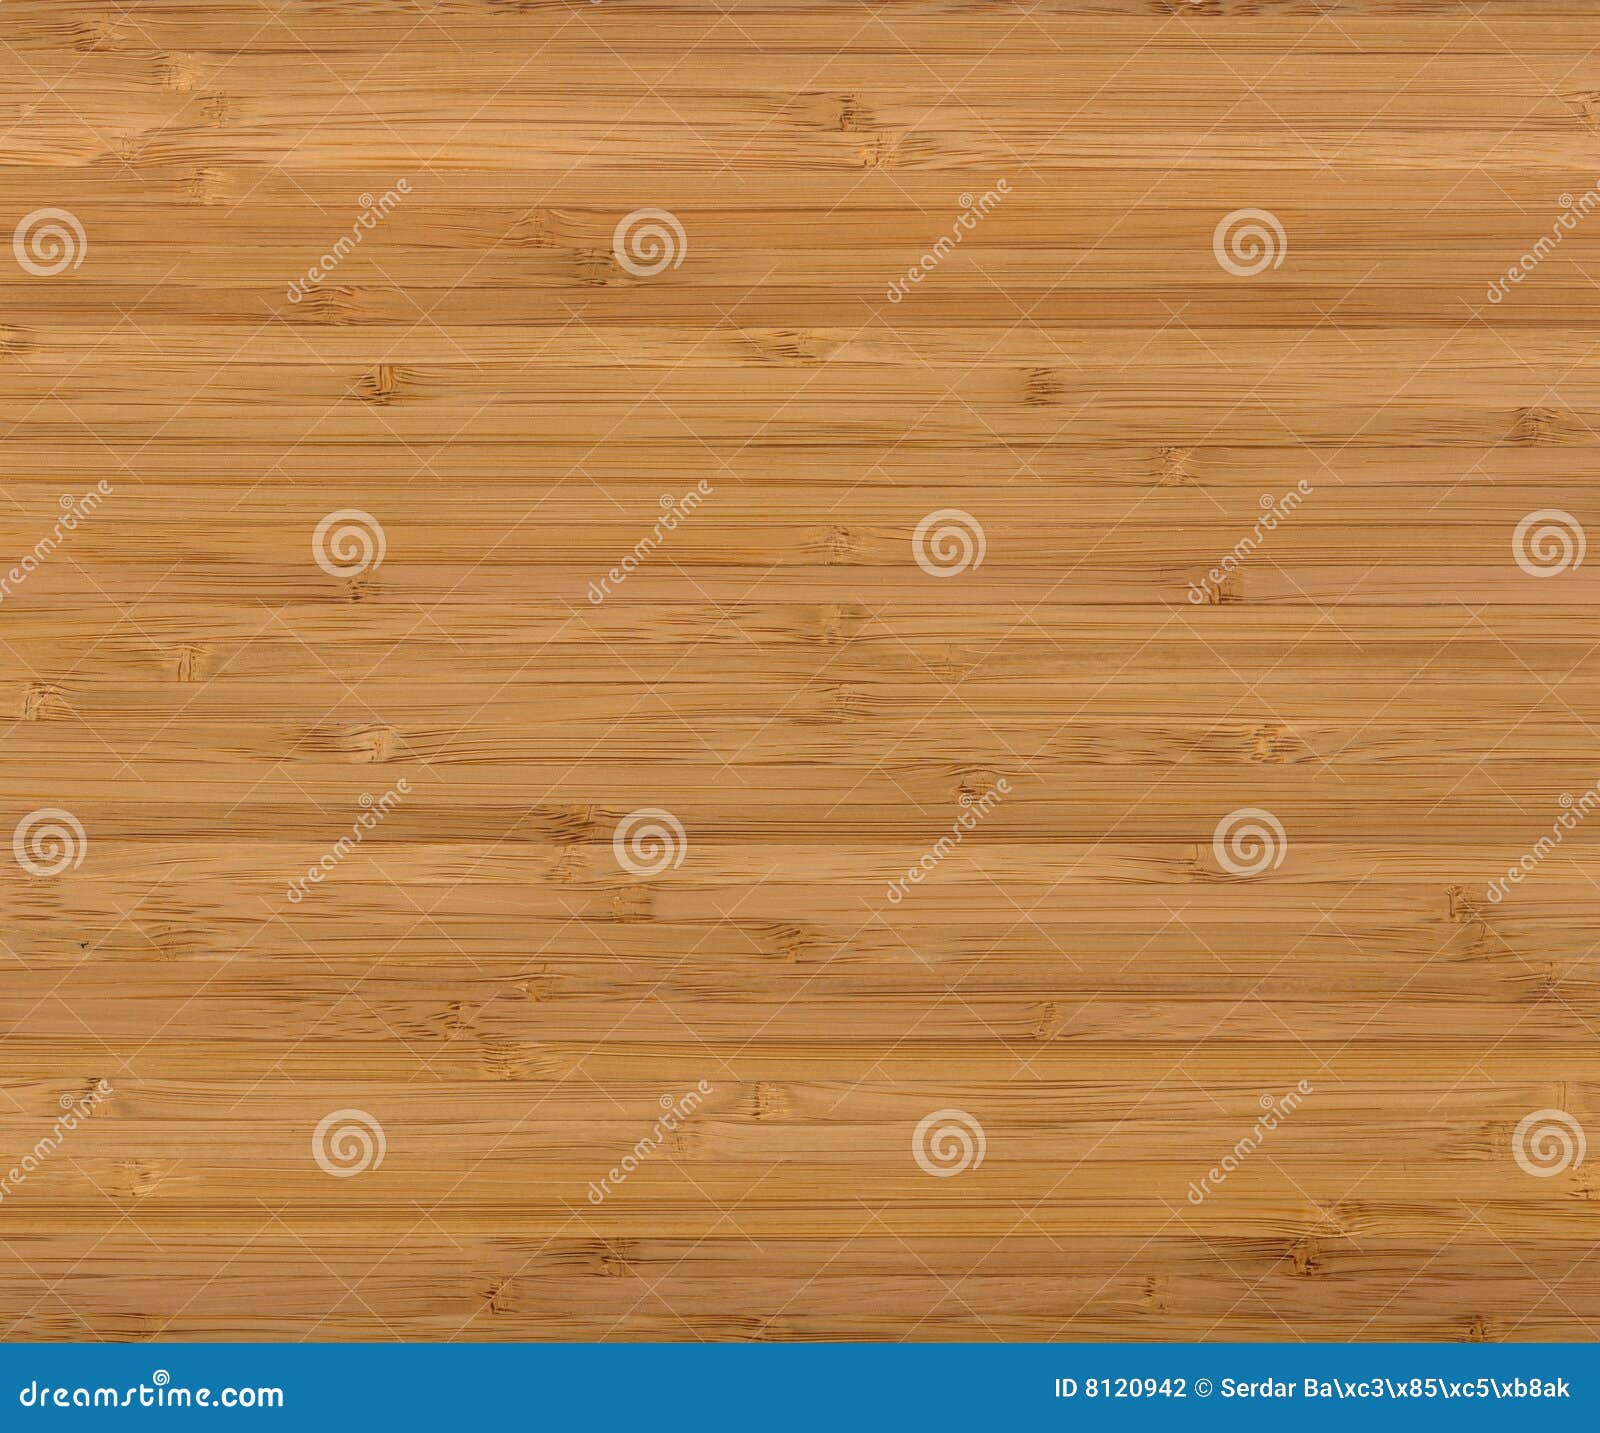 Natural bamboo wood texture Stock Photo by ©josemagon 123548394